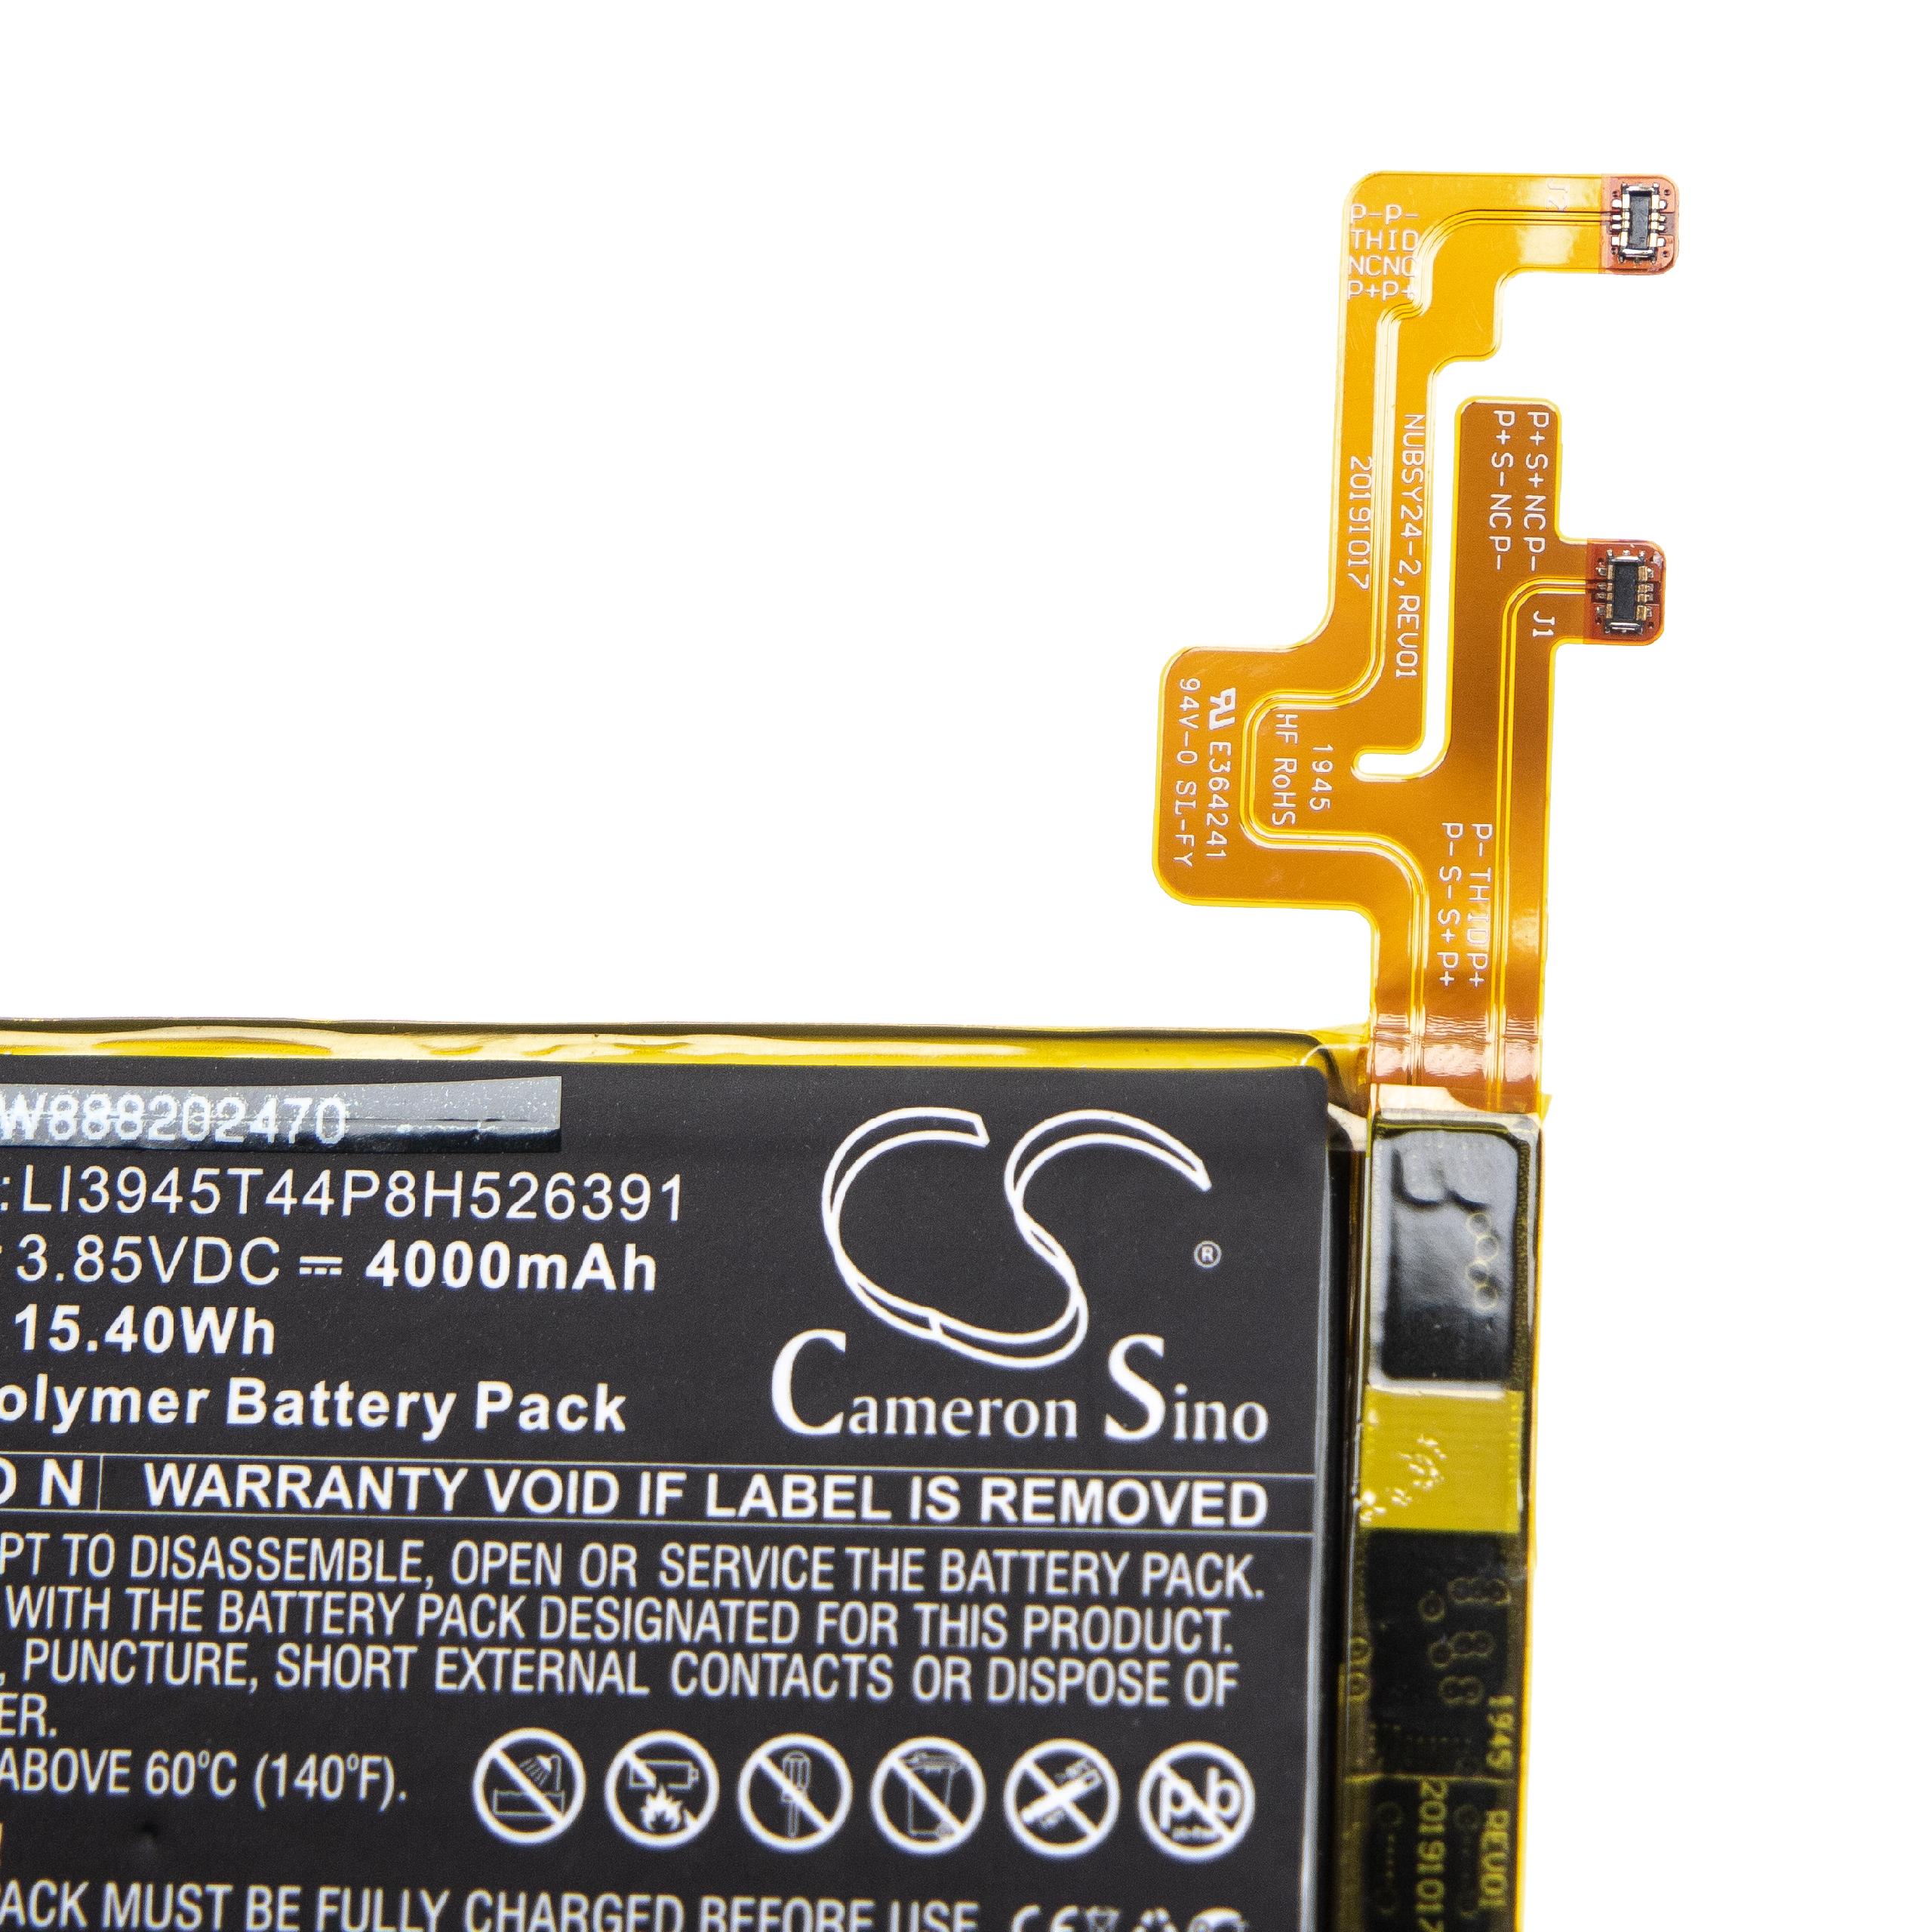 Mobile Phone Battery Replacement for ZTE / Nubia LI3945T44P8H526391 - 4000mAh 3.85V Li-polymer